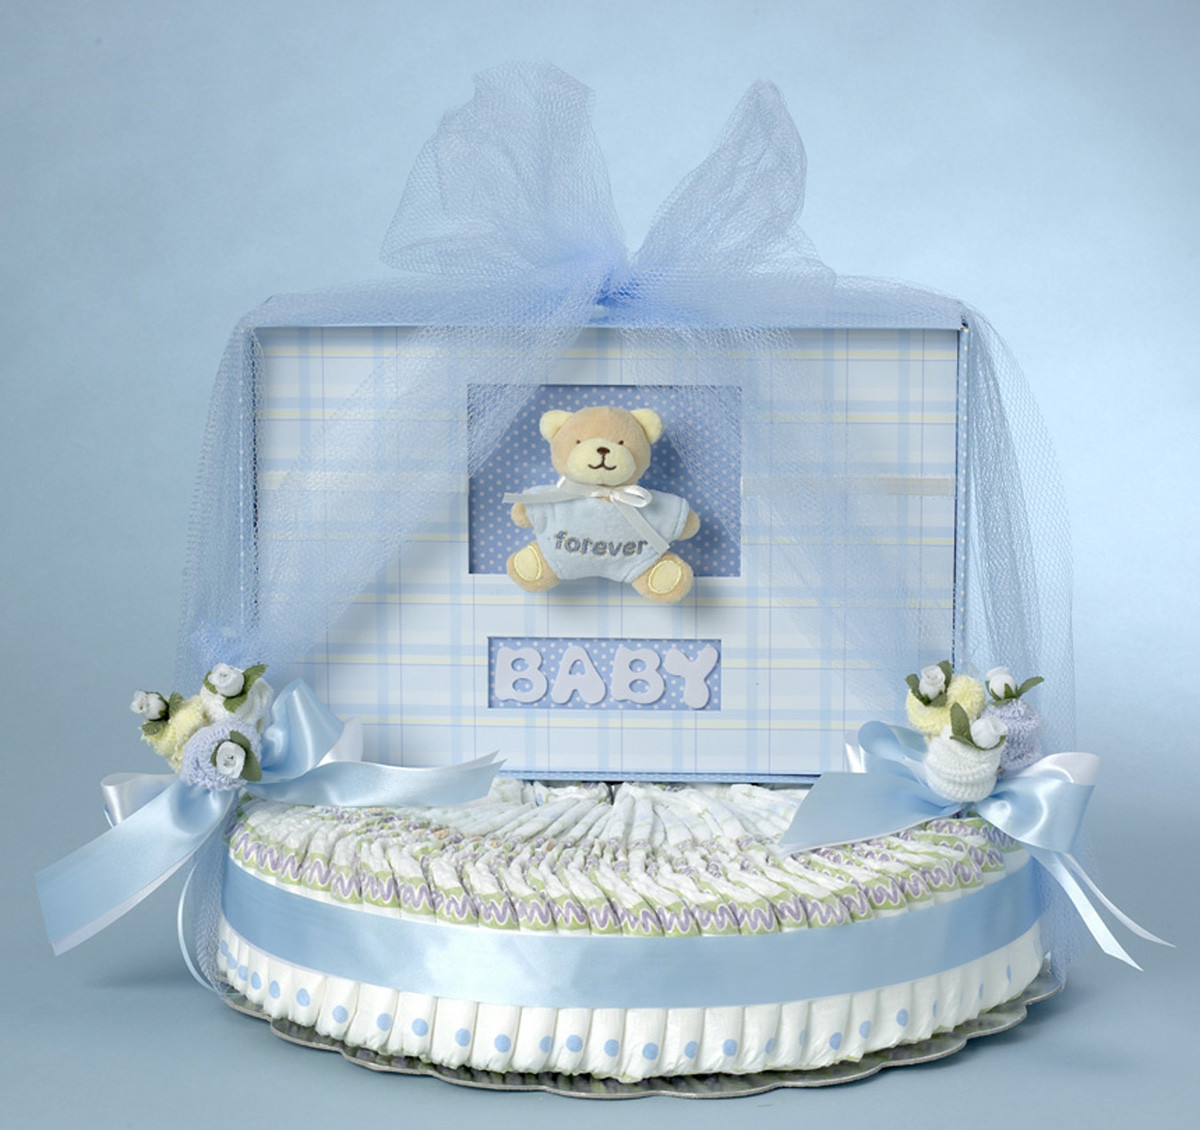 Baby Boy Keepsake Gift
 Keepsake Diaper Cake Gift for Baby Boy by Silly Phillie